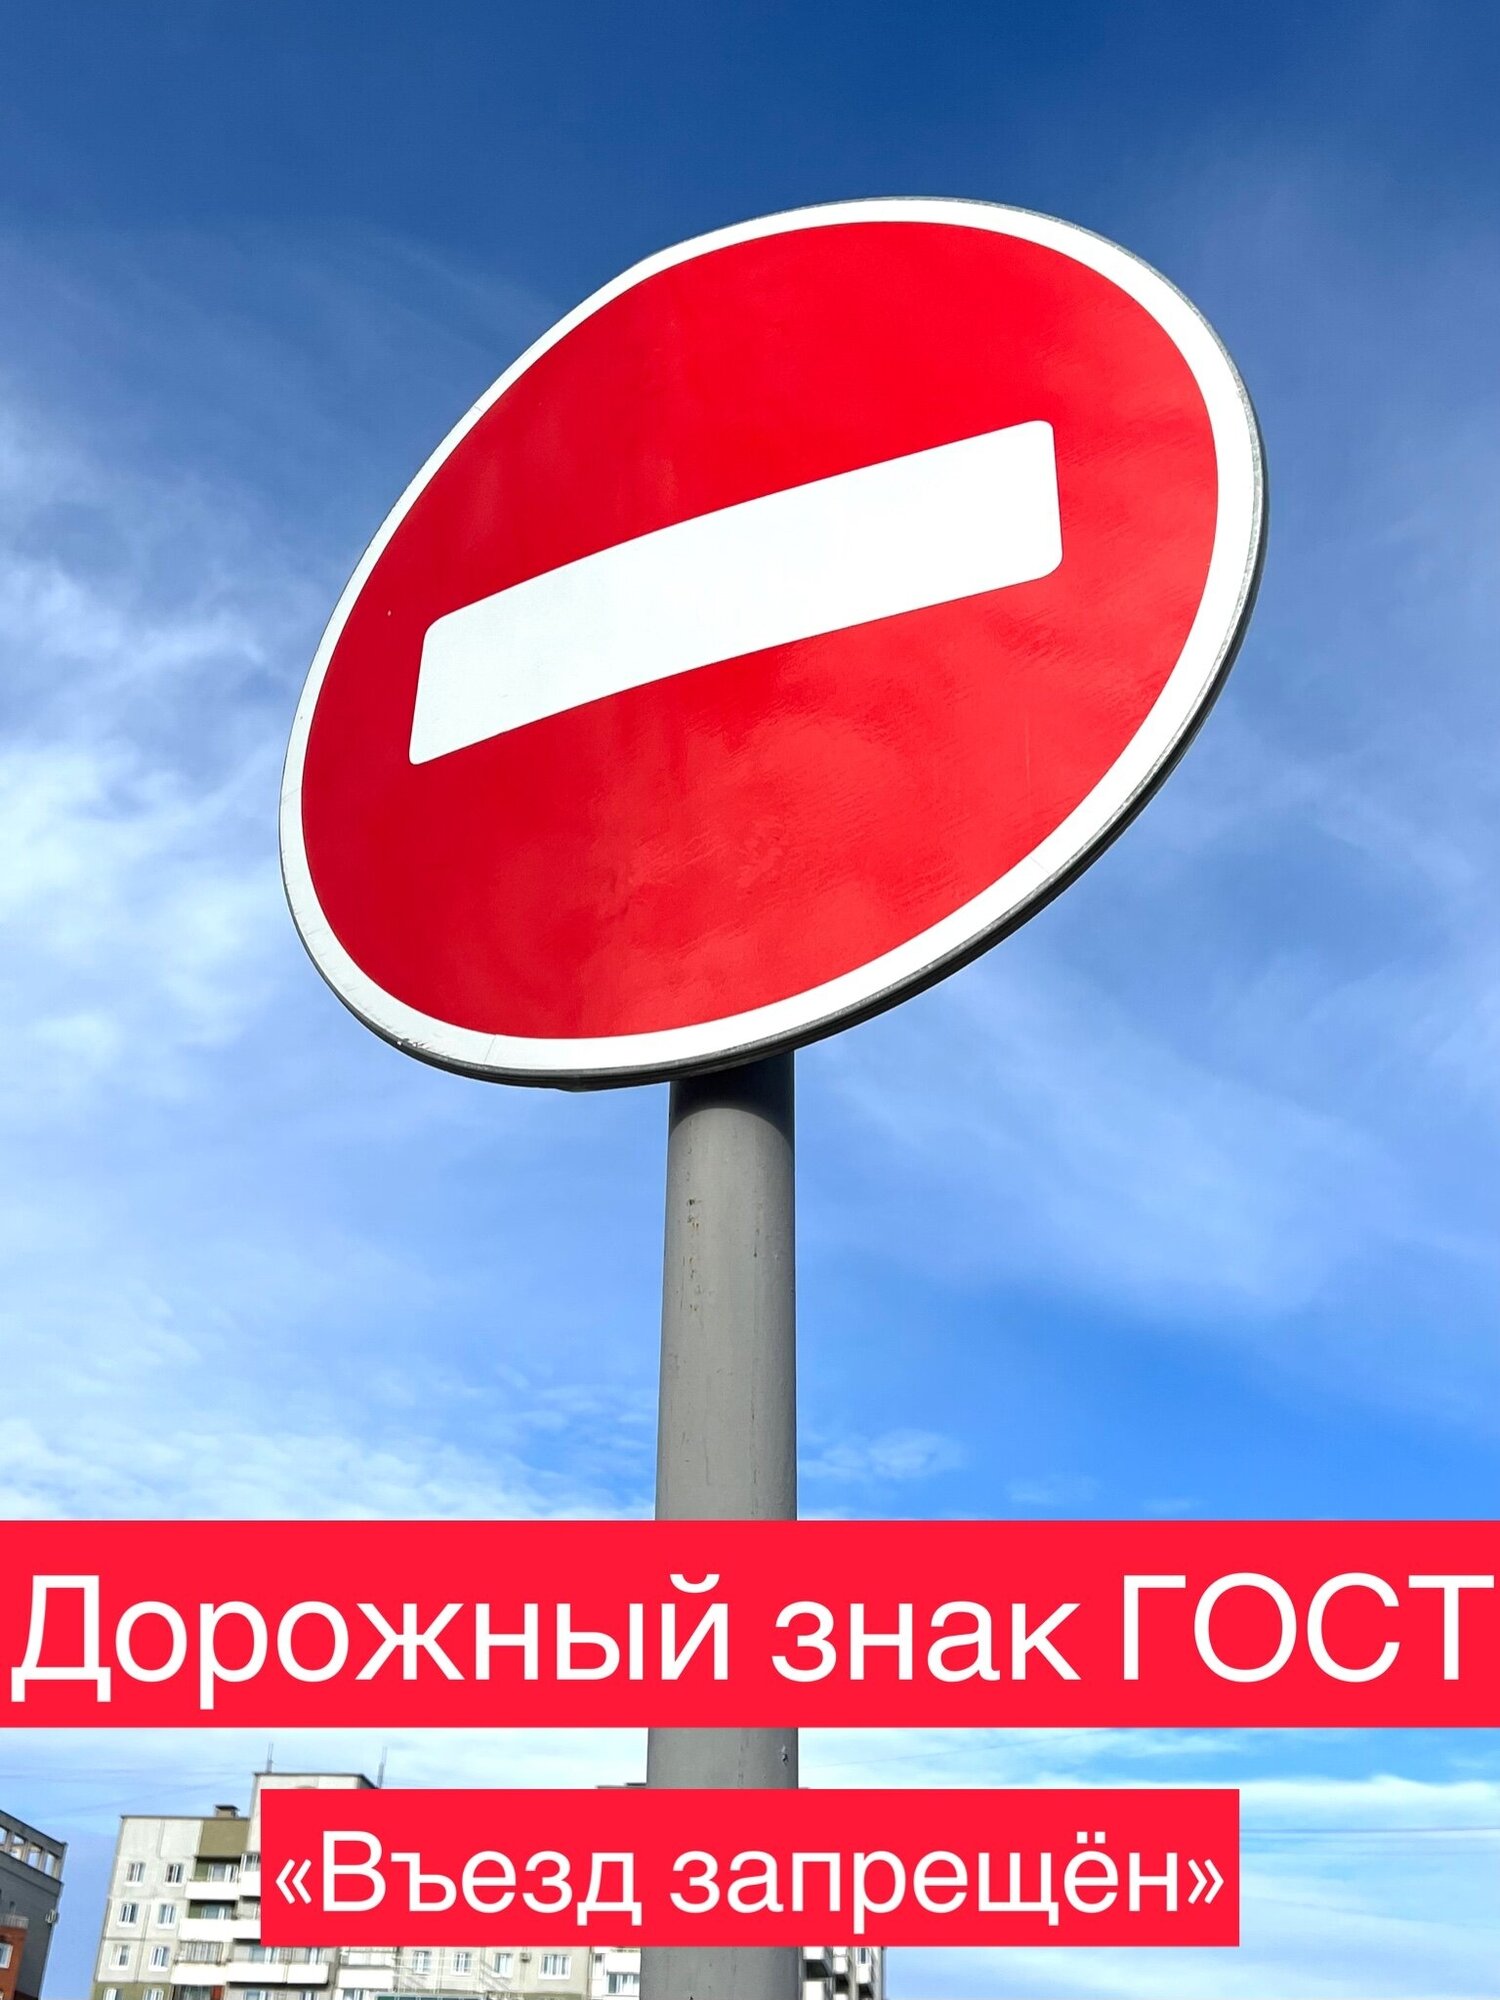 Дорожный знак металлический ГОСТ въезд запрещен (Кирпич) п 3.1 ПДД, размер 700/700 мм